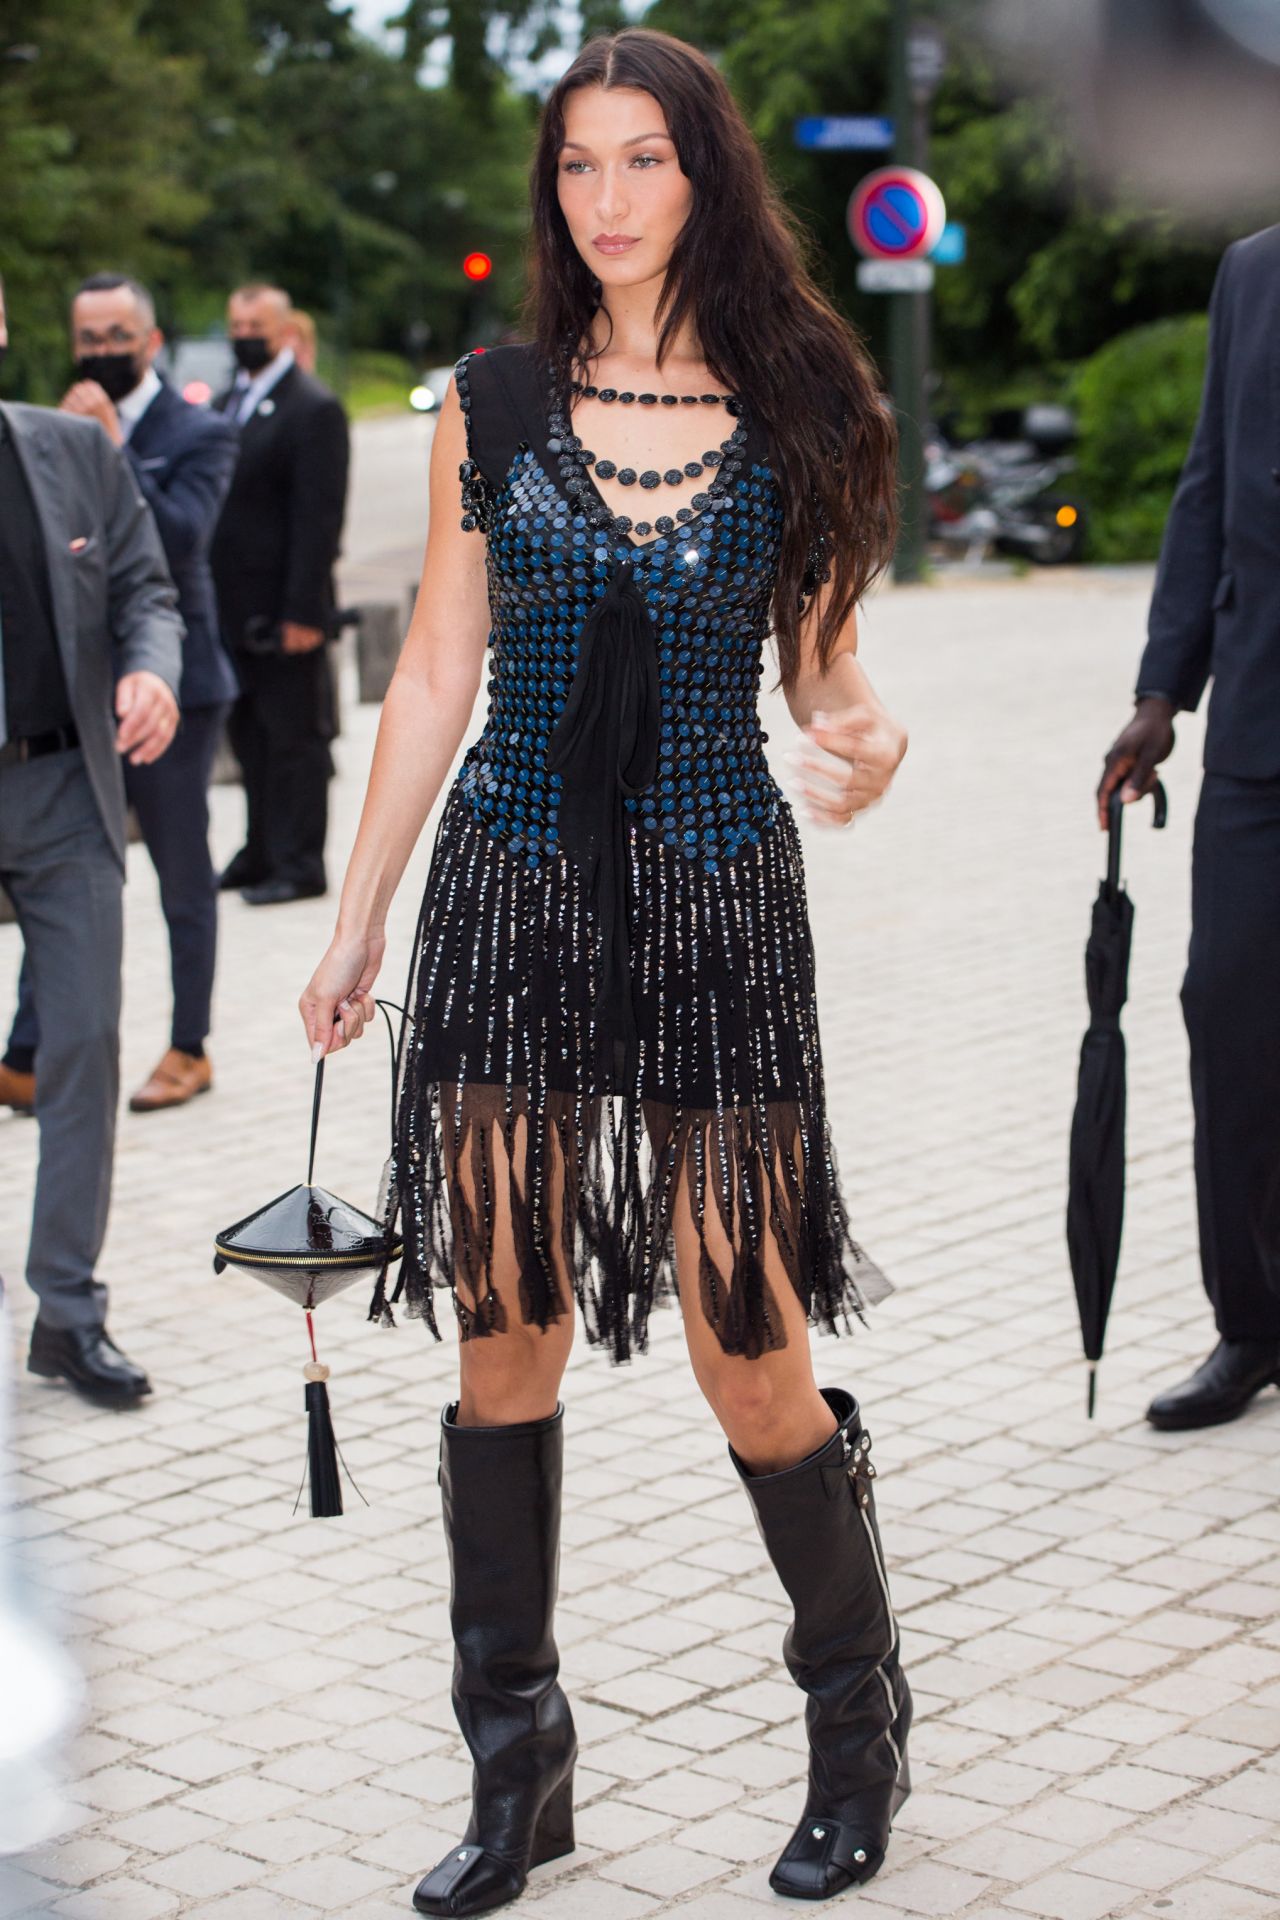 Bella Hadid Wears Fun Fringe Dress at Louis Vuitton Dinner with